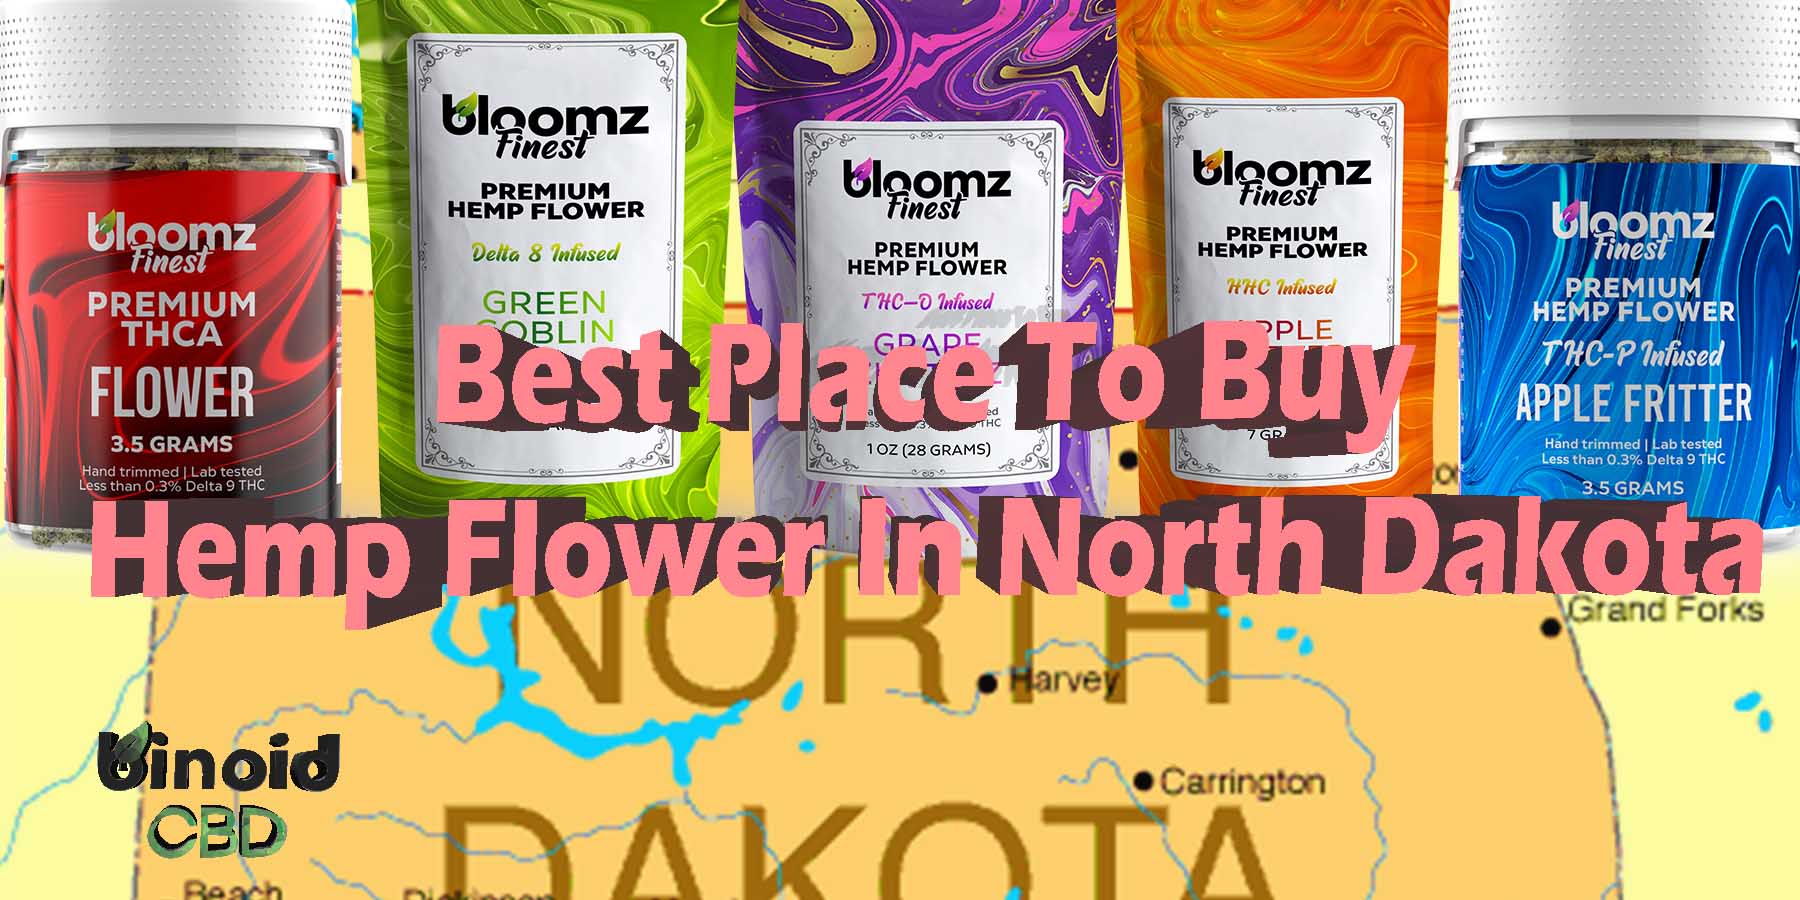 Buy Hemp Flower North Dakota Joints PreRolls Get Online Near Me For Sale Best Brand Strongest Real Legal Store Shop Reddit